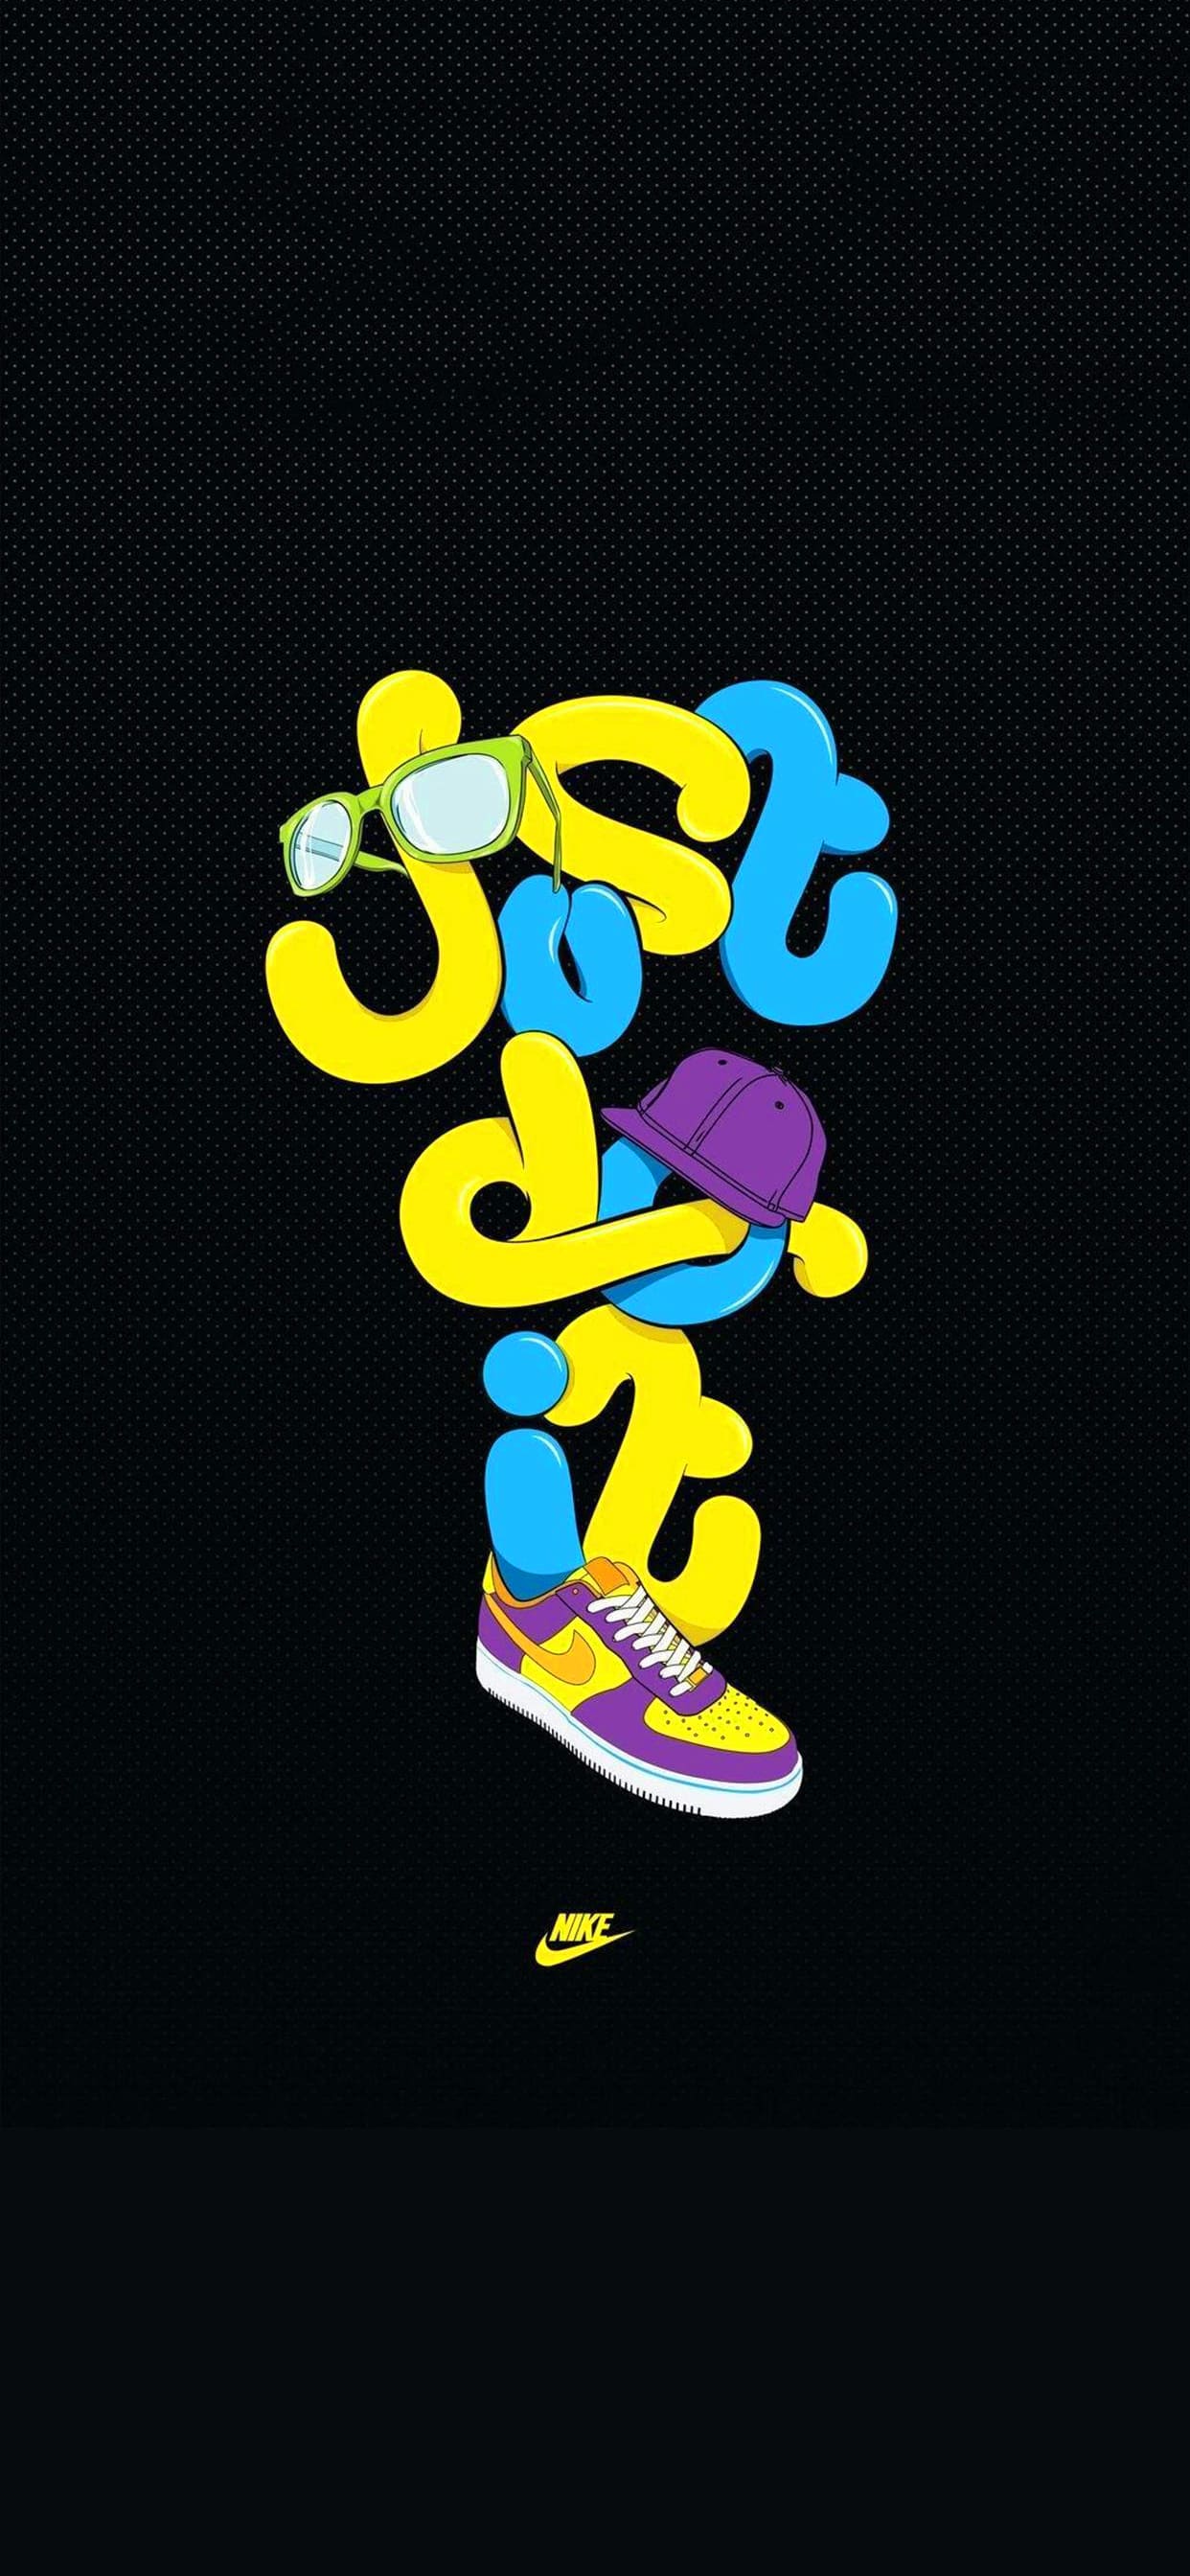 Nike Logo Wallpapers 56 images